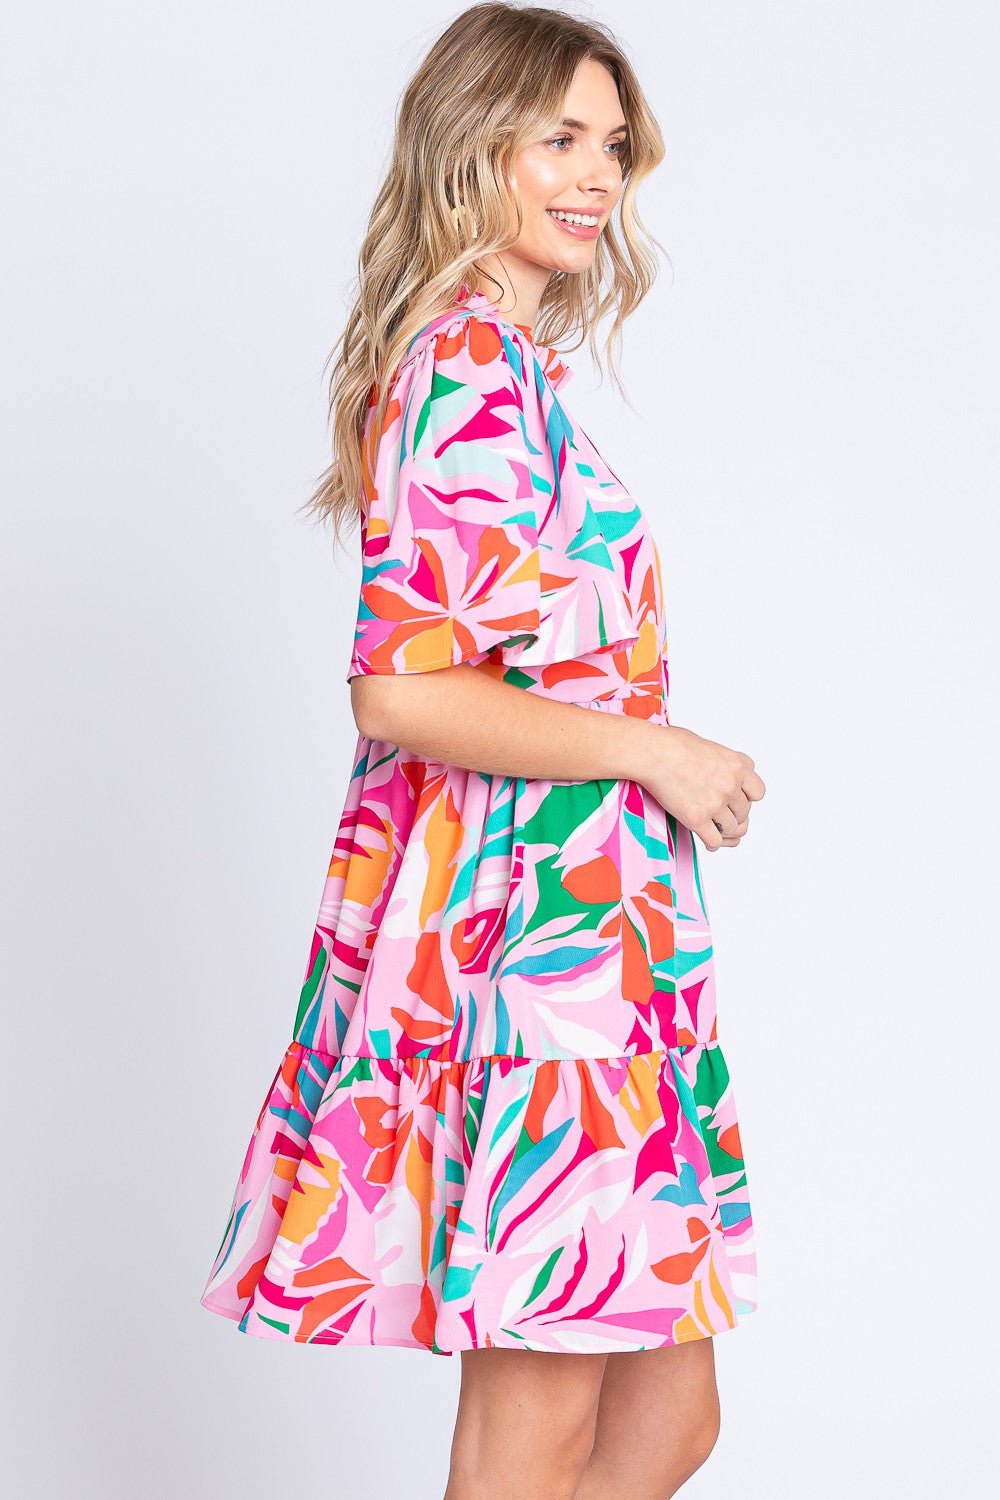 Tropical Floral Print Short Sleeve Mini Dress in Pink/GreenMini DressGeeGee